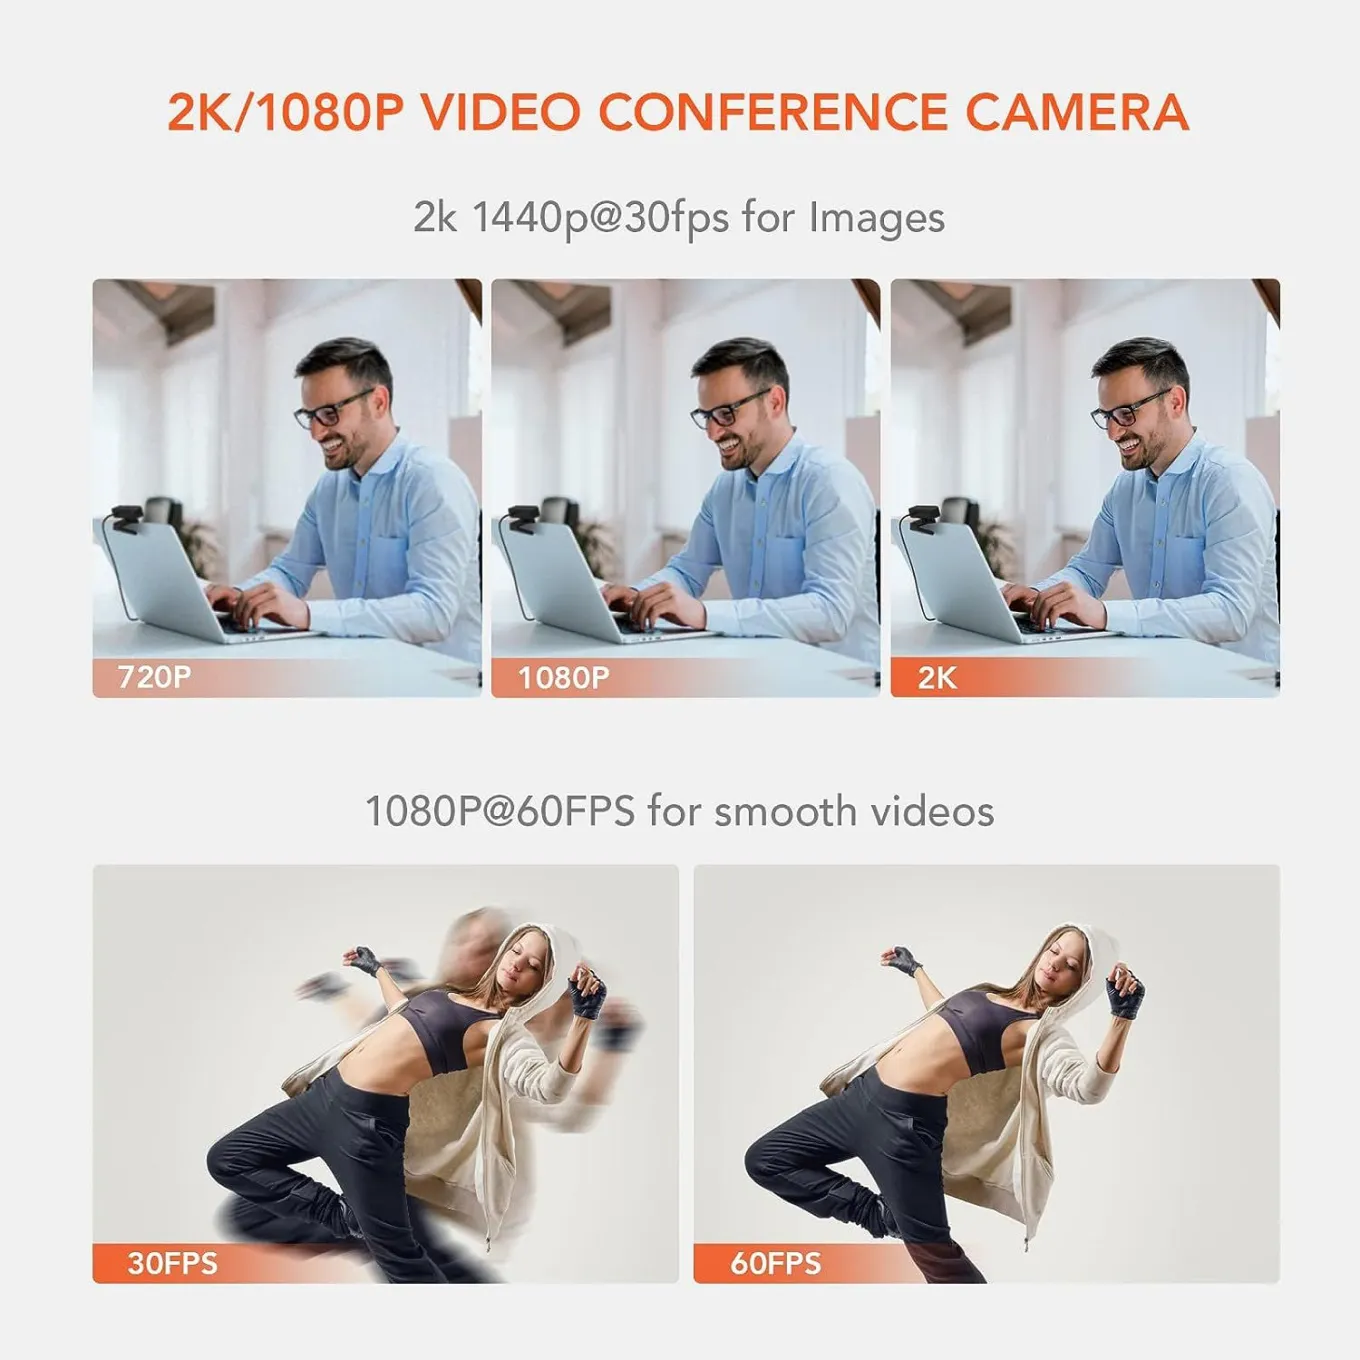 2K video conference camera